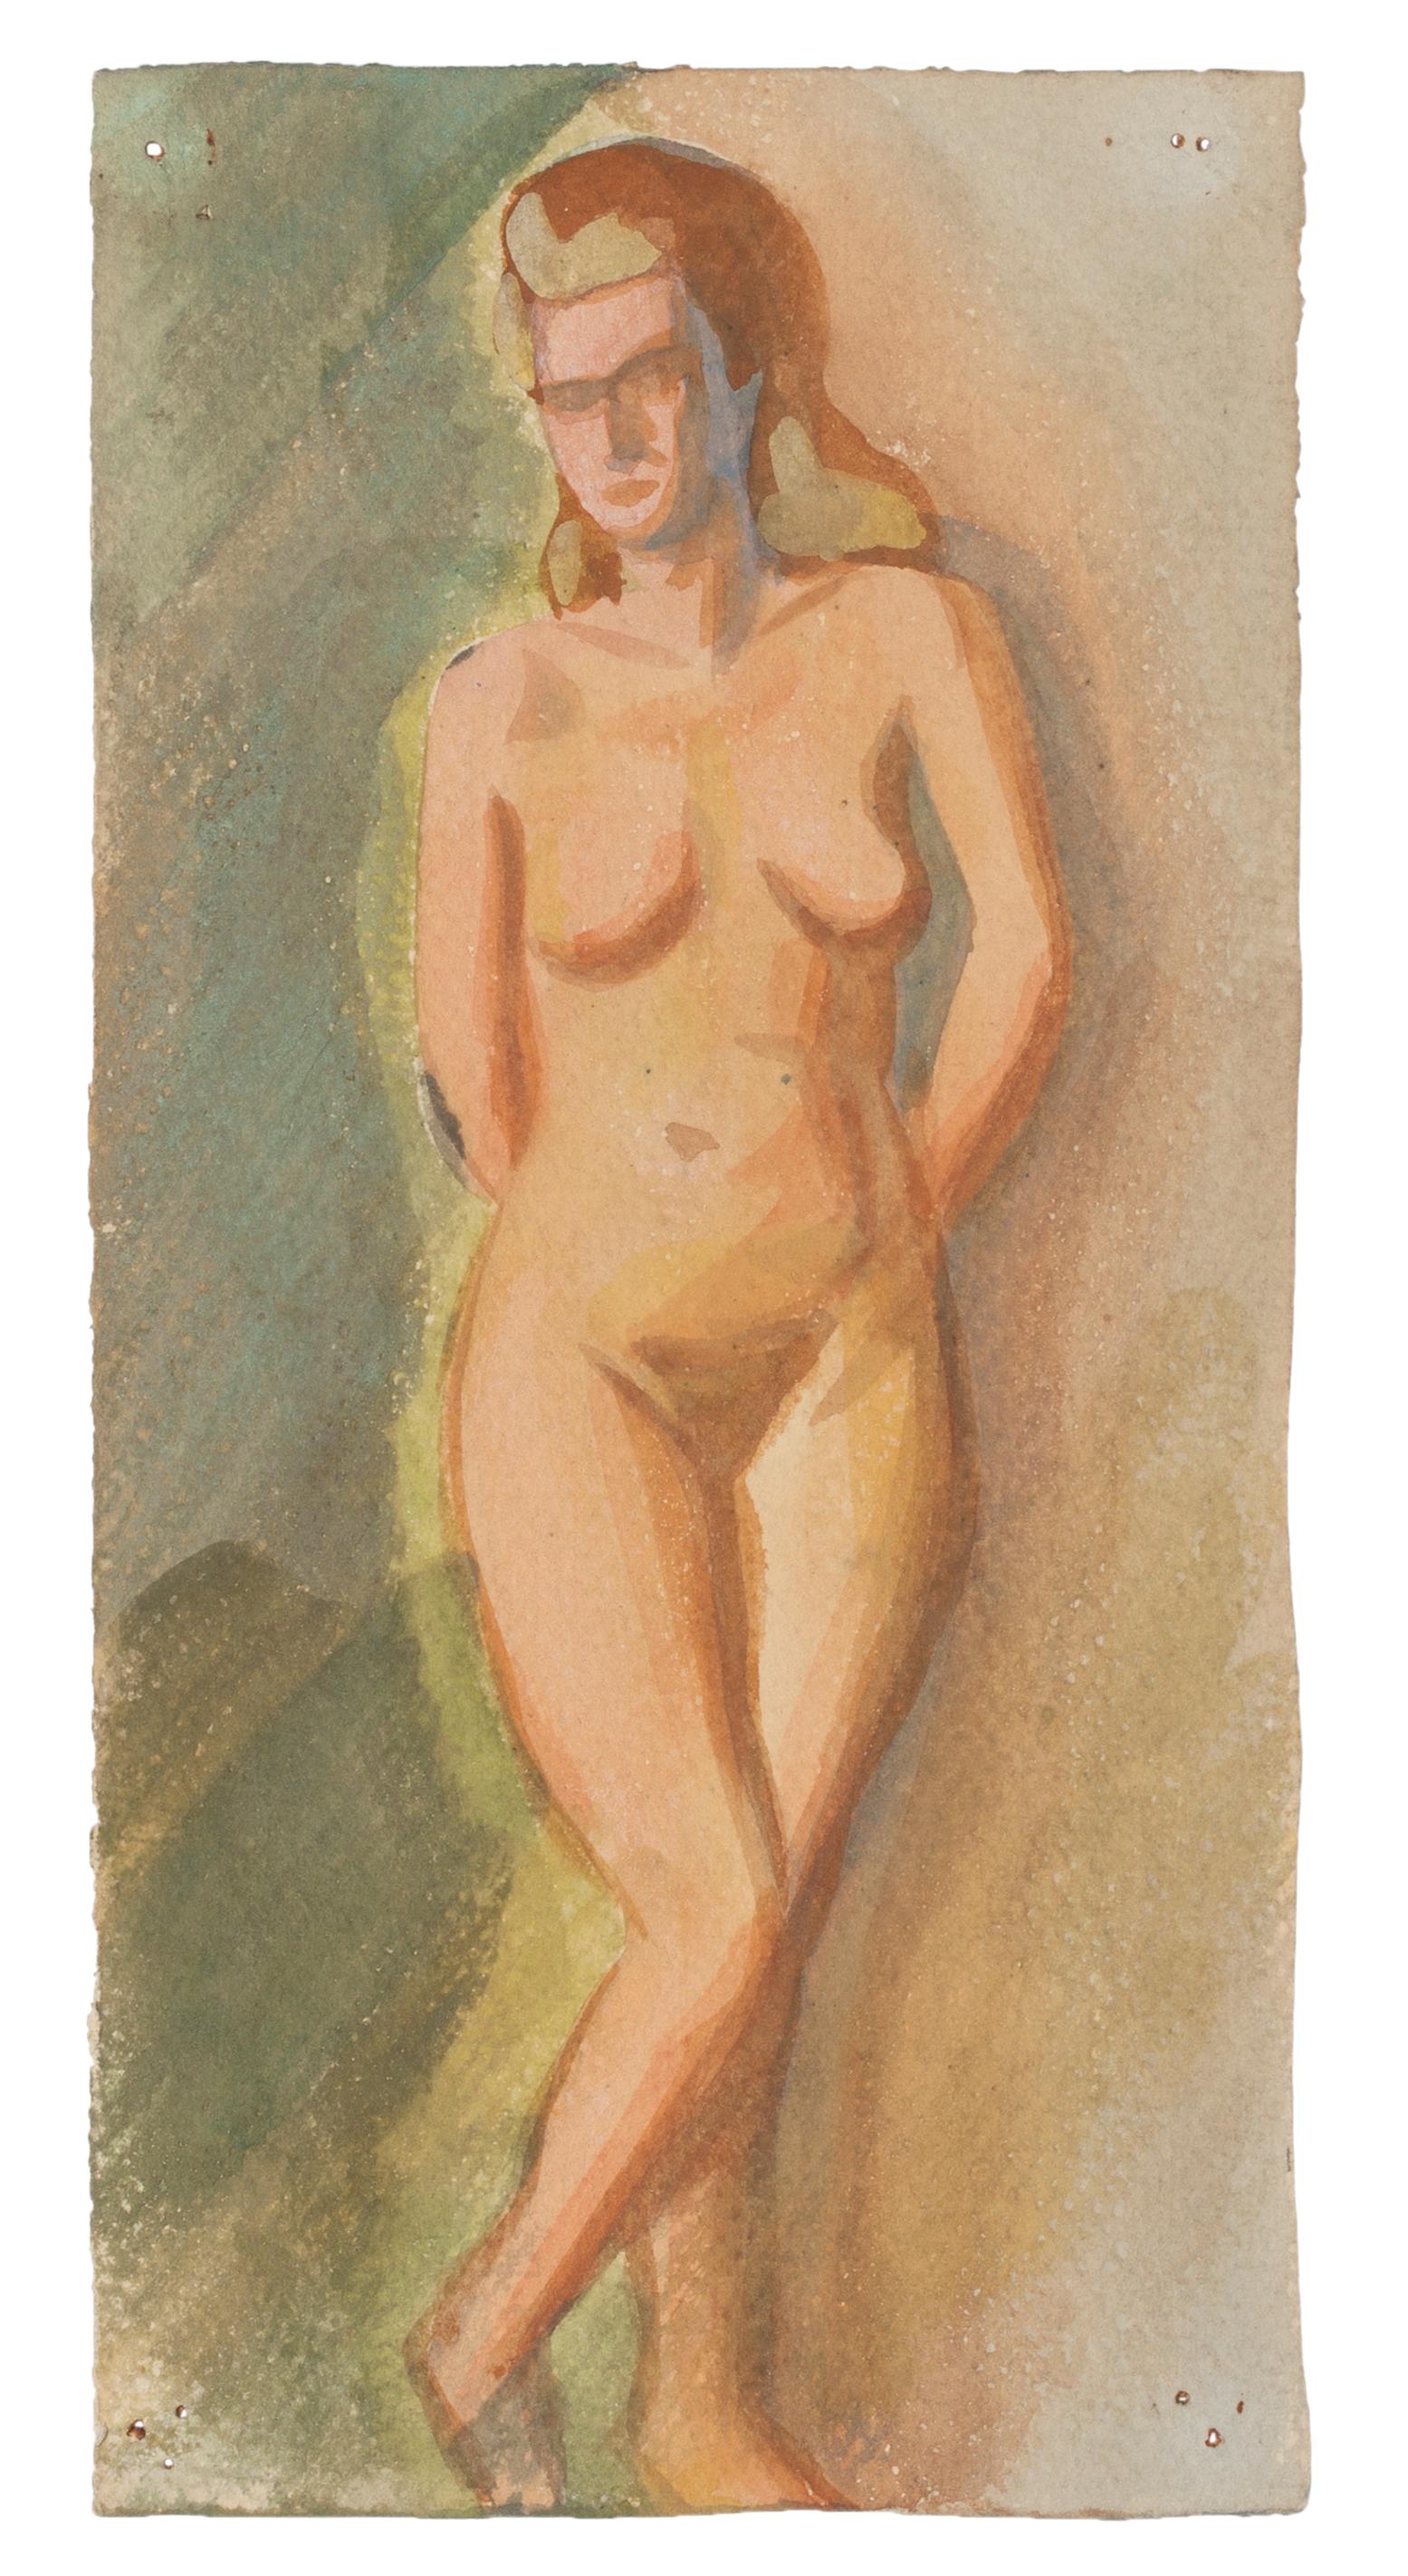 Nude - Watercolor on Paper by Jean Delpech - 1960s